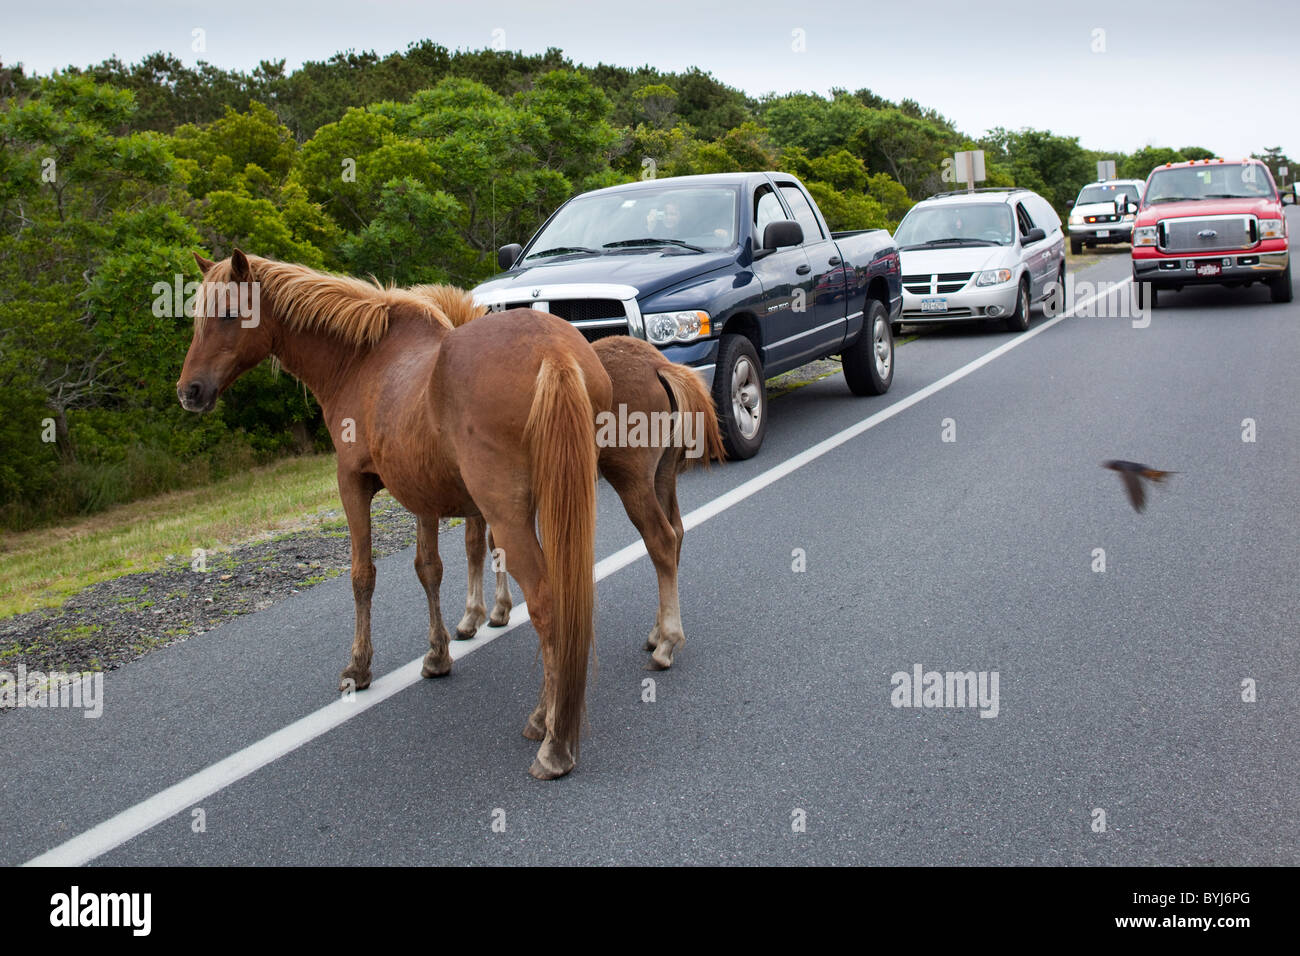 USA, Maryland, Assateague Island National Seashore, Wildpferde nähert sich Touristen Autos auf Assateague Insel Stockfoto